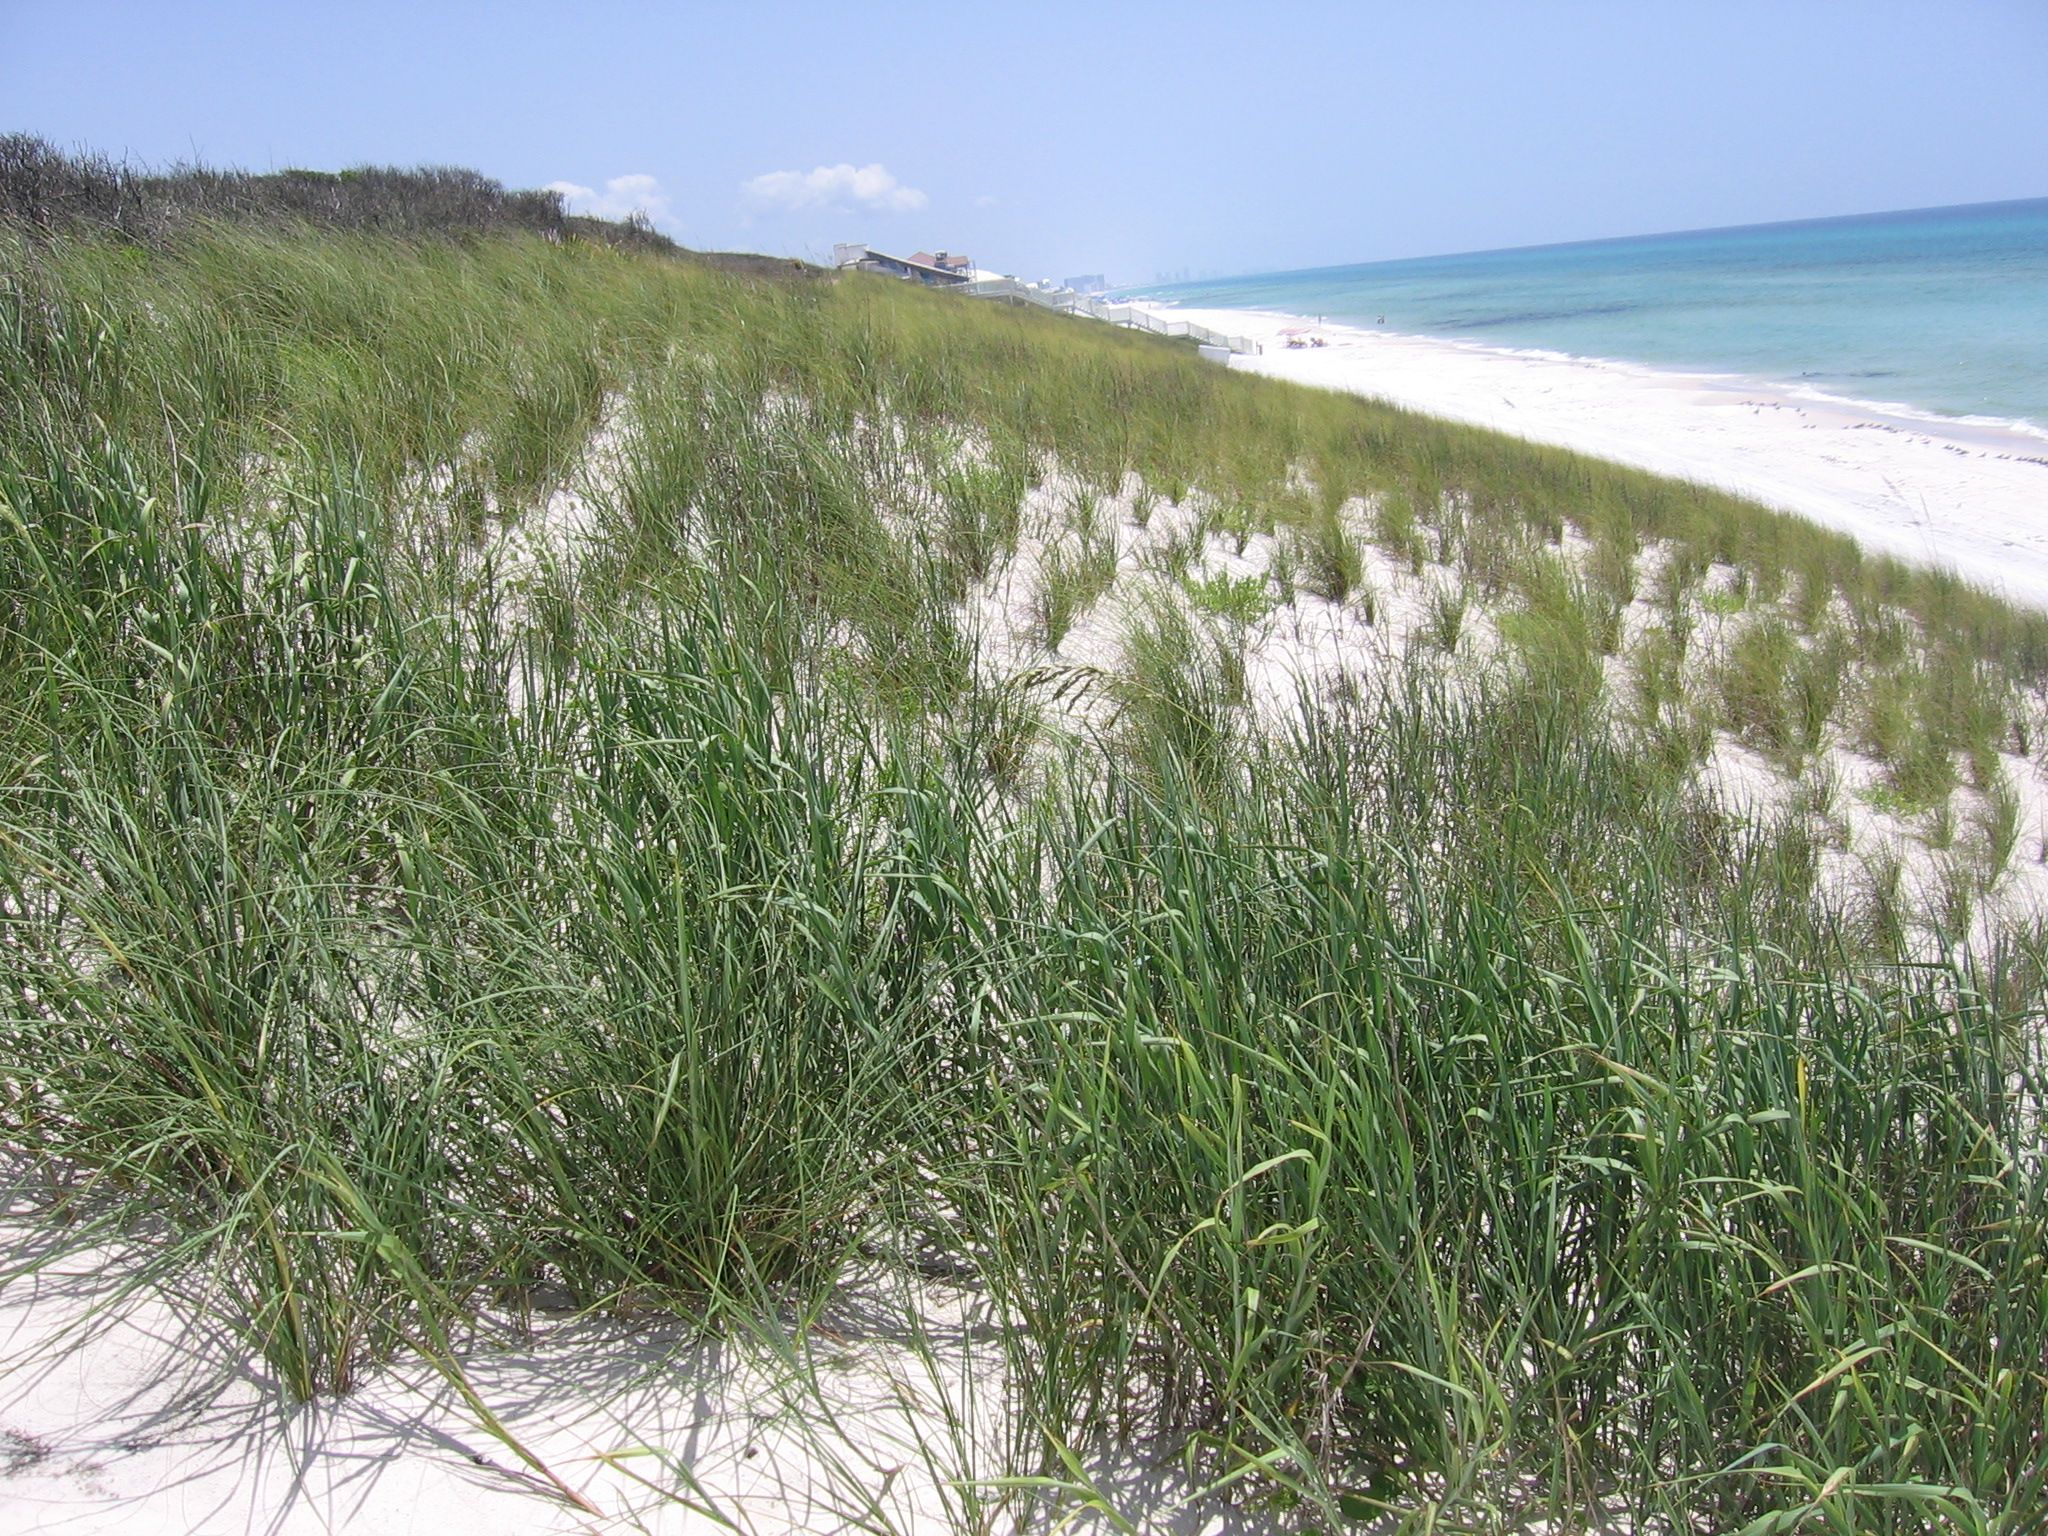 Alys Beach Dunes with Coastal Vegetation Steadily Growing 